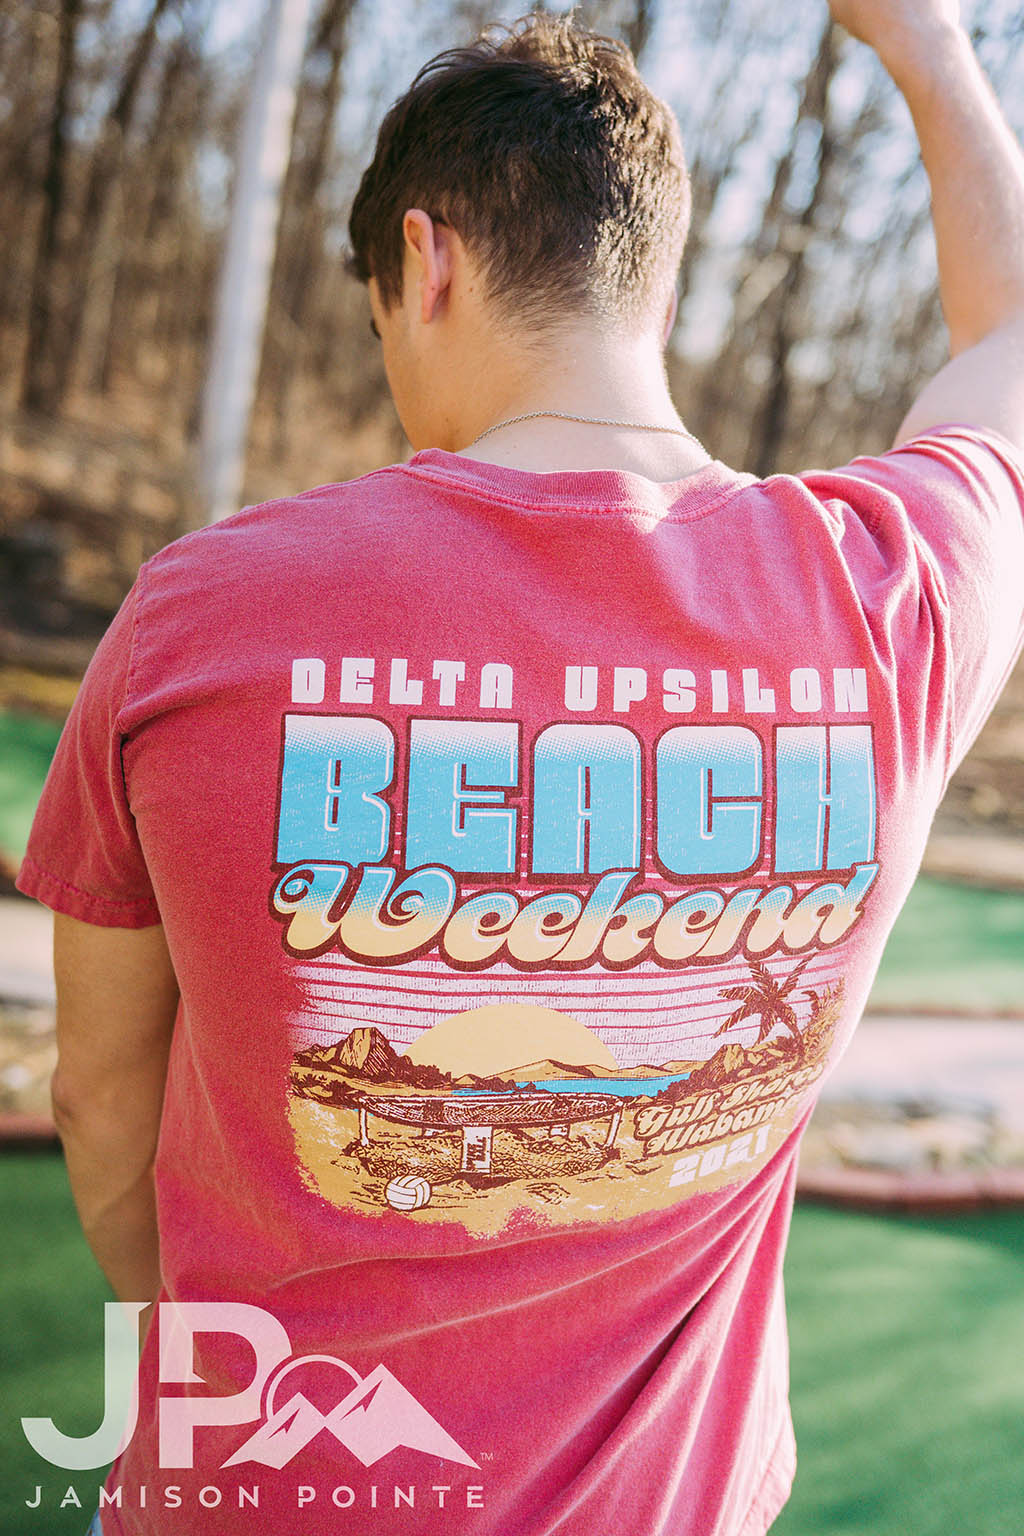 Delta Upsilon Brotherhood Retreat Beach Weekend Tee